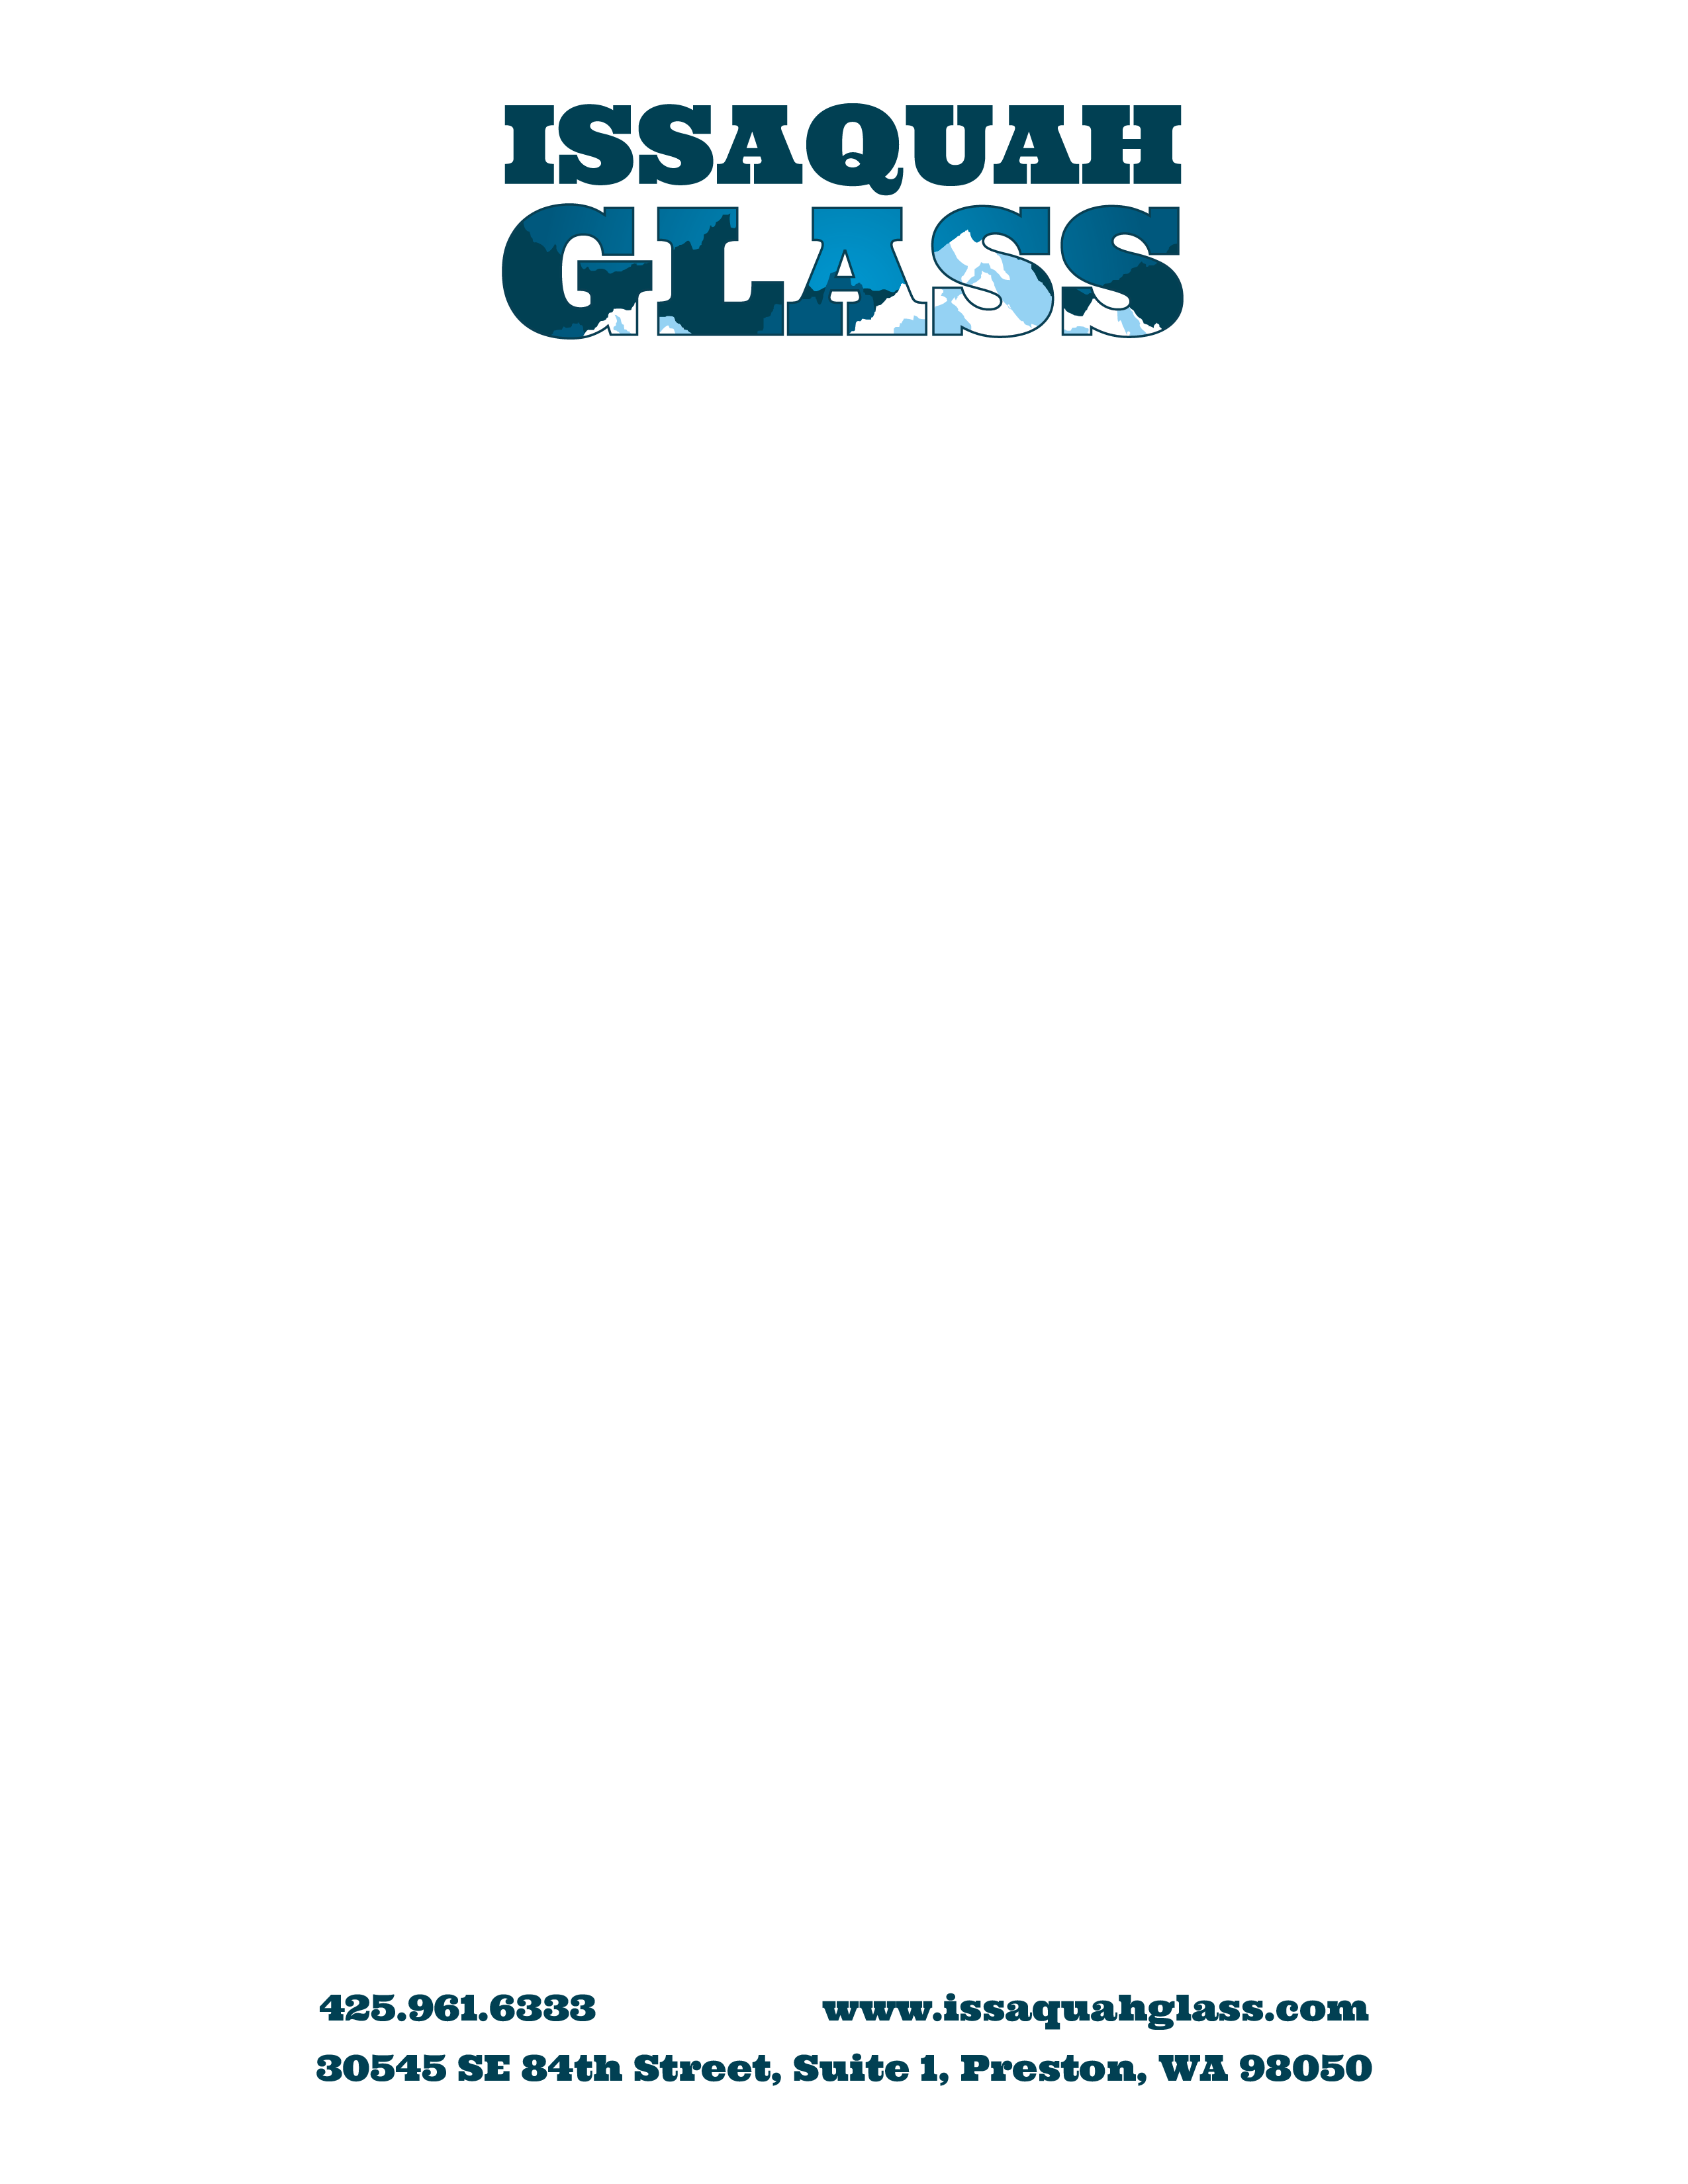 Issaquah Glass letterhead